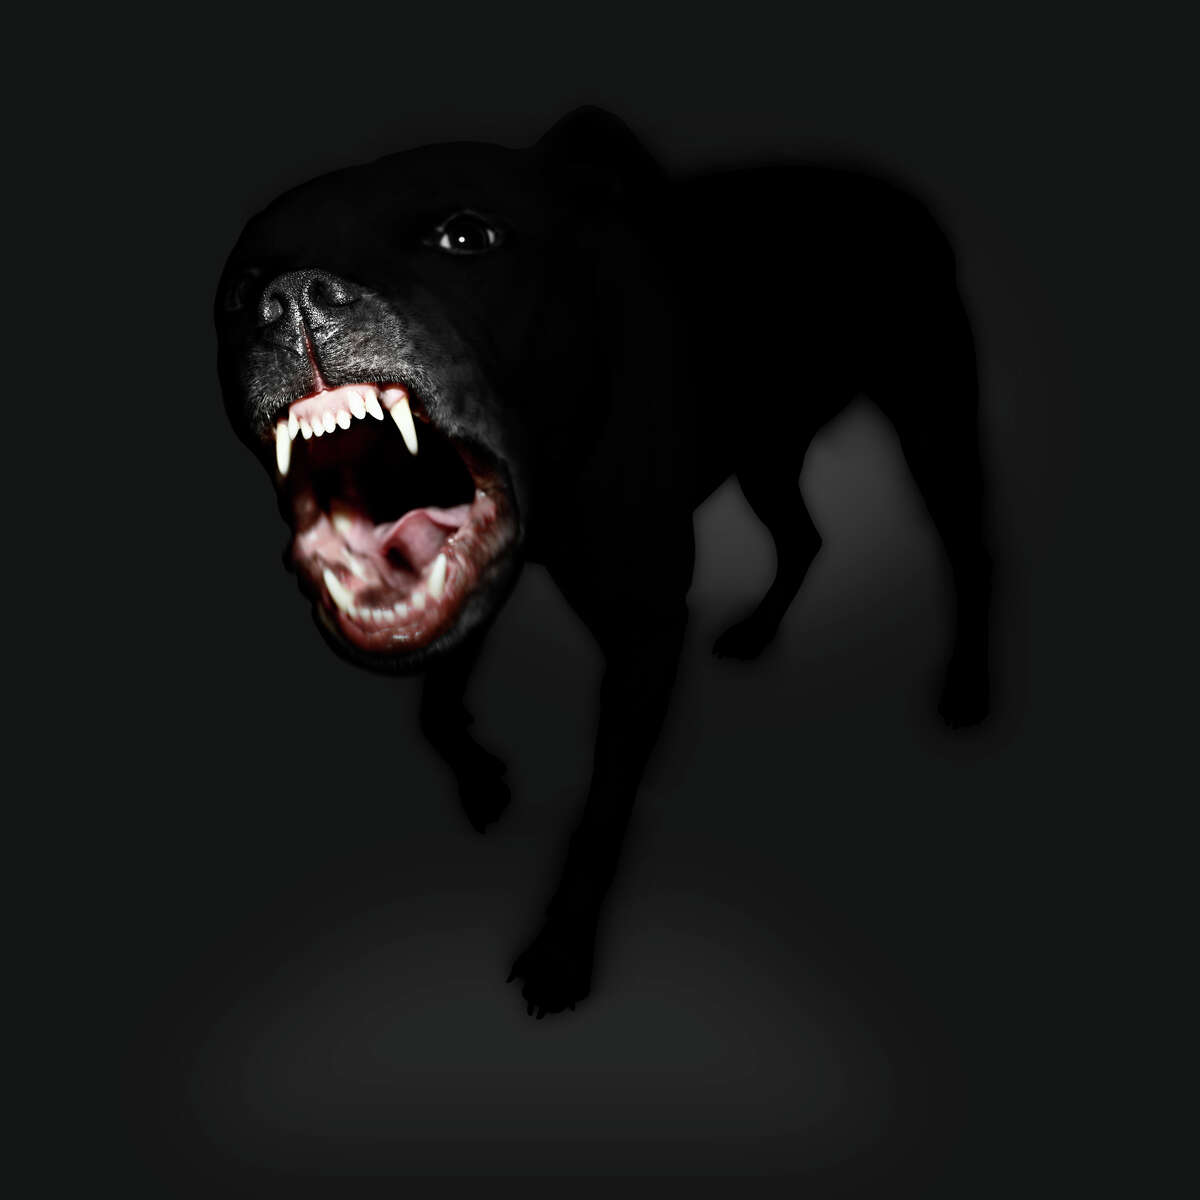 Scary dog. Злая собака. Питбуль злой. Злая черная собака. Доберман оскал.